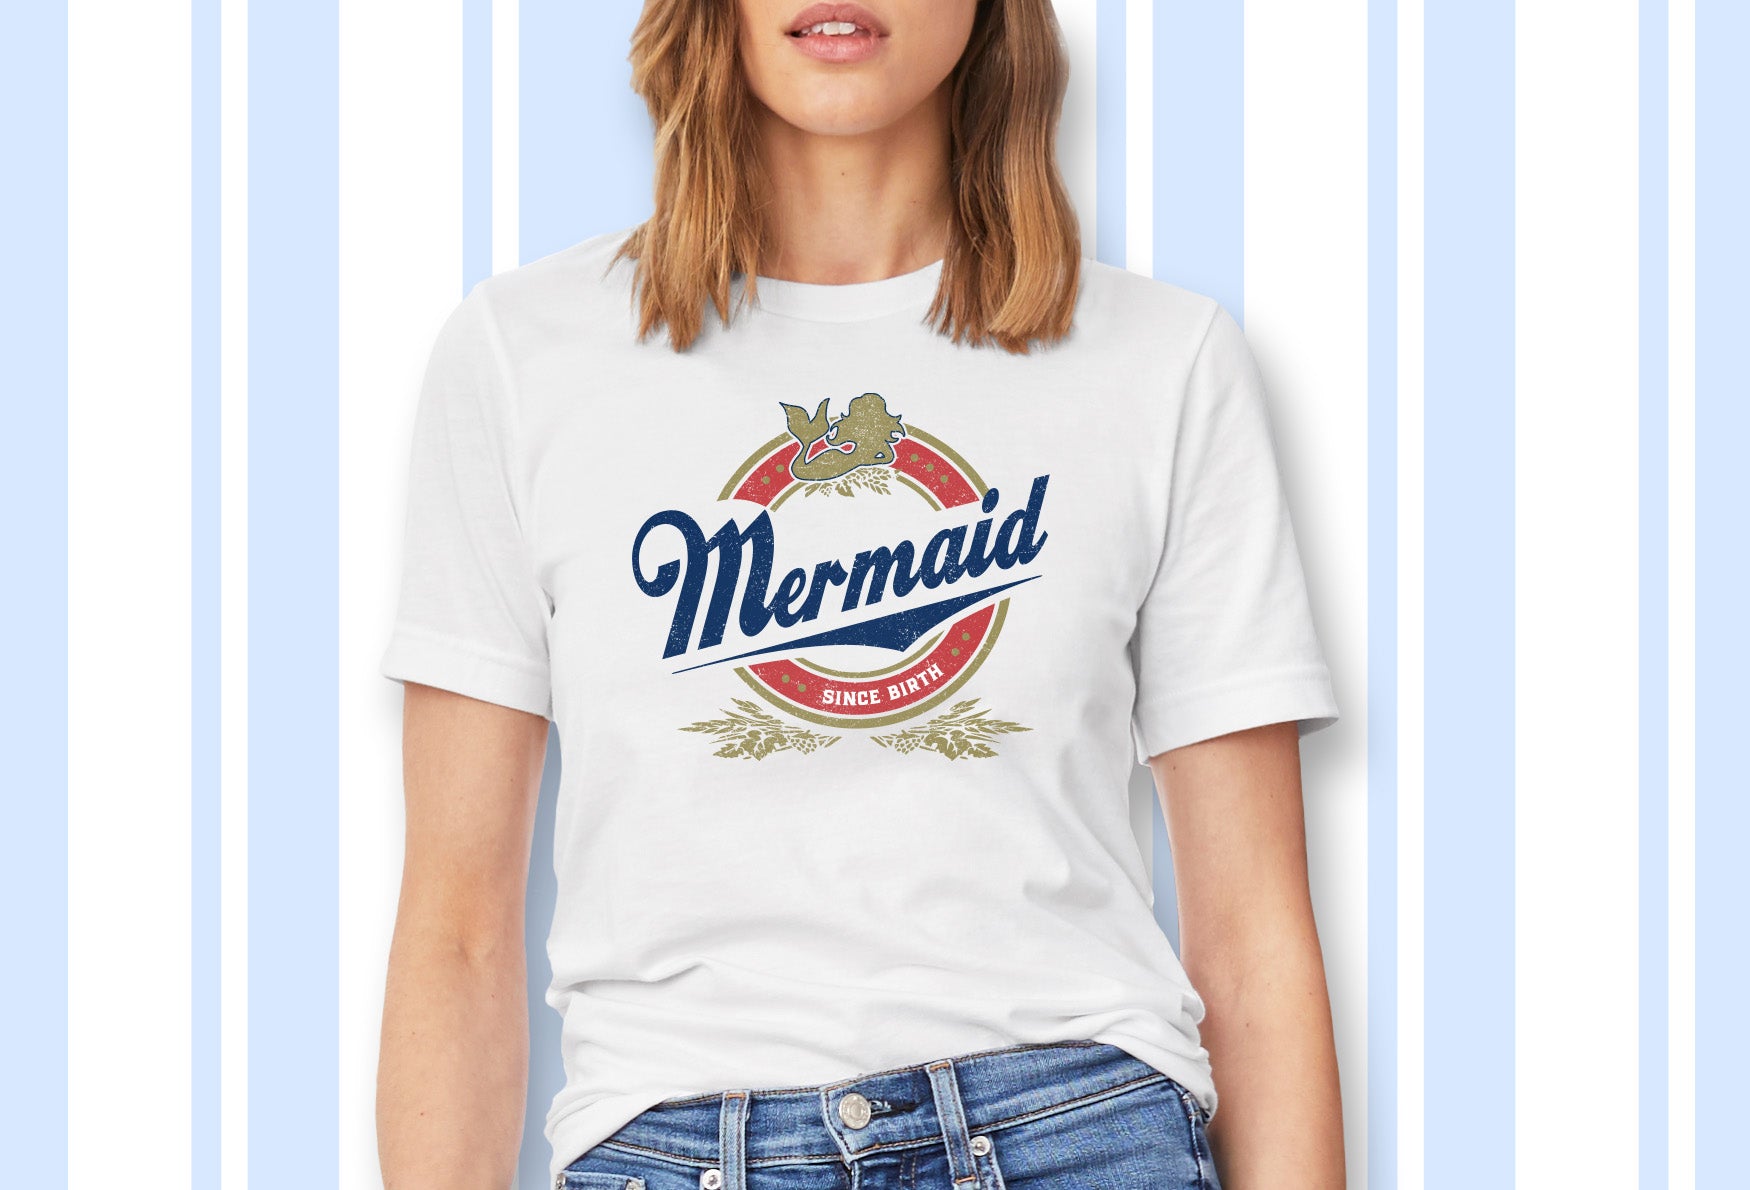 Mermaid Since Birth Shirt - HighCiti